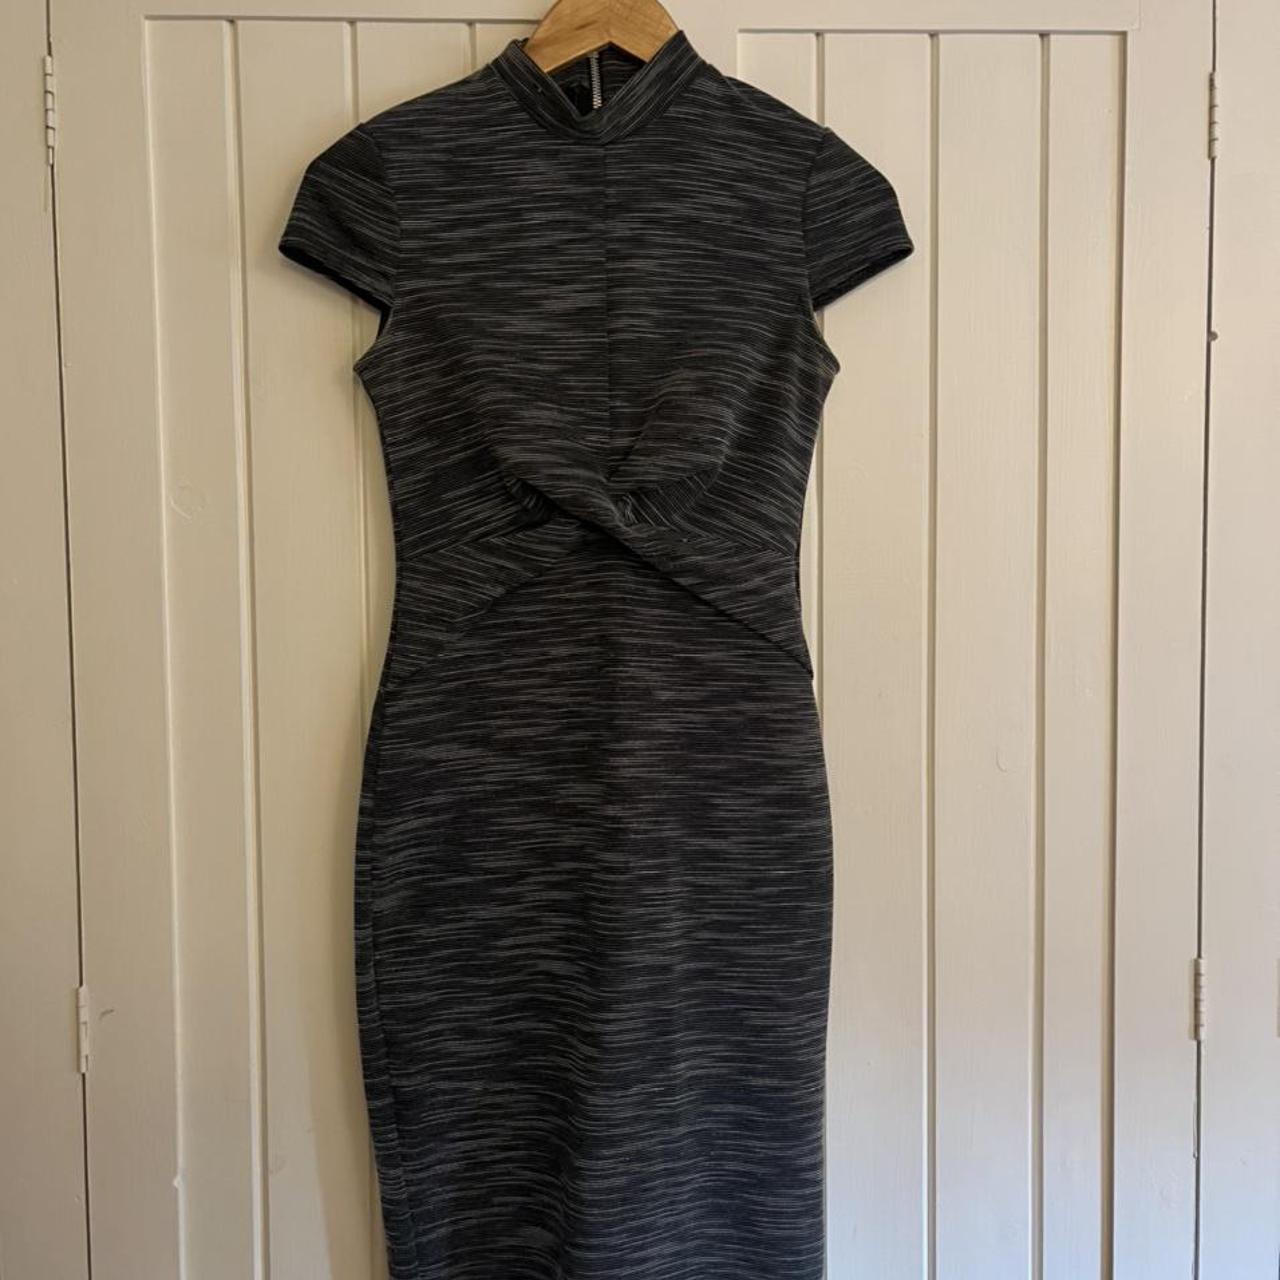 Miss Selfridge Women's Black and Grey Dress | Depop